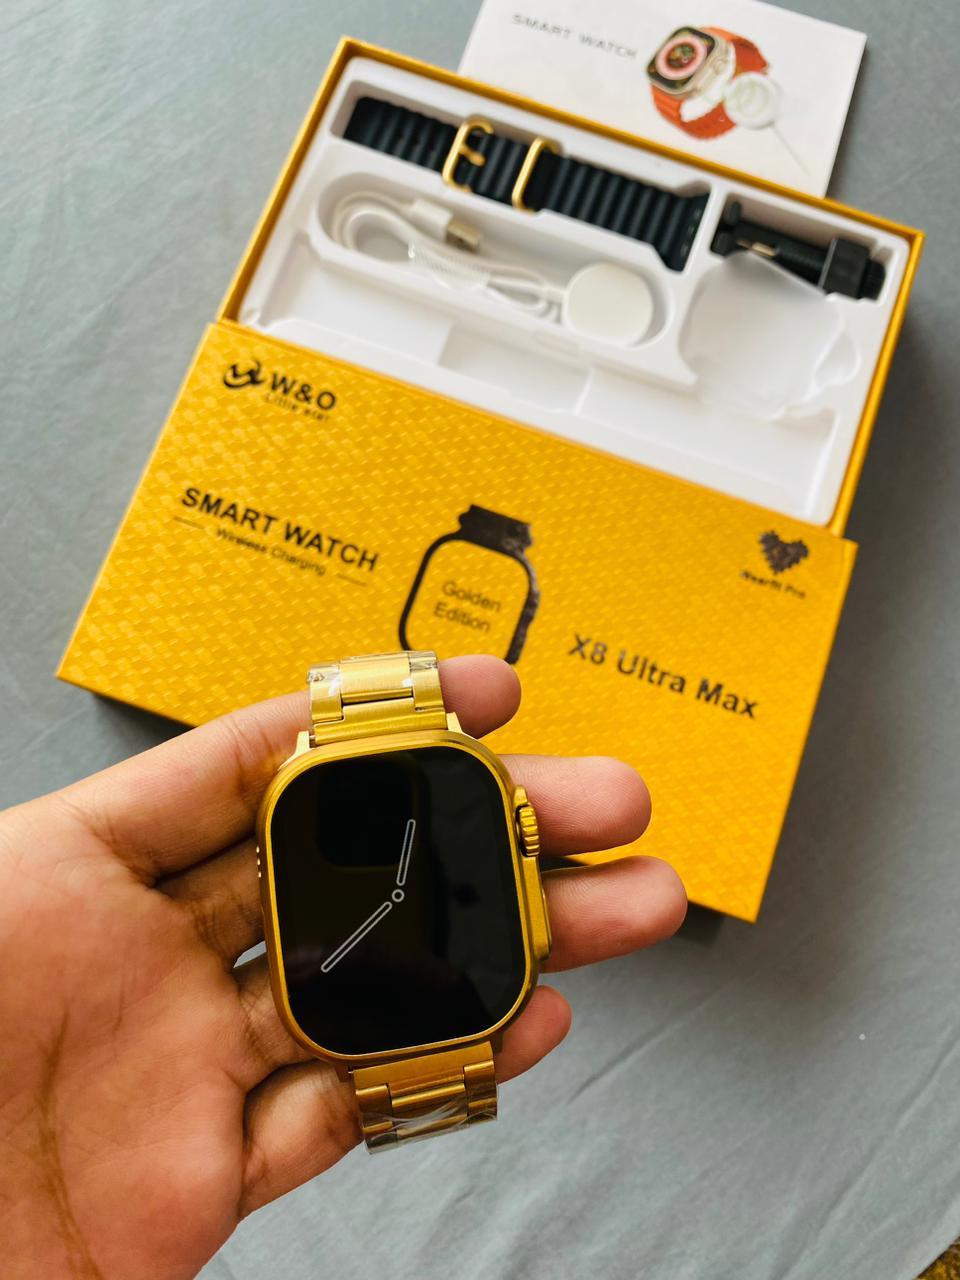 X8 Ultra Max Smart Watch Price in Pakistan